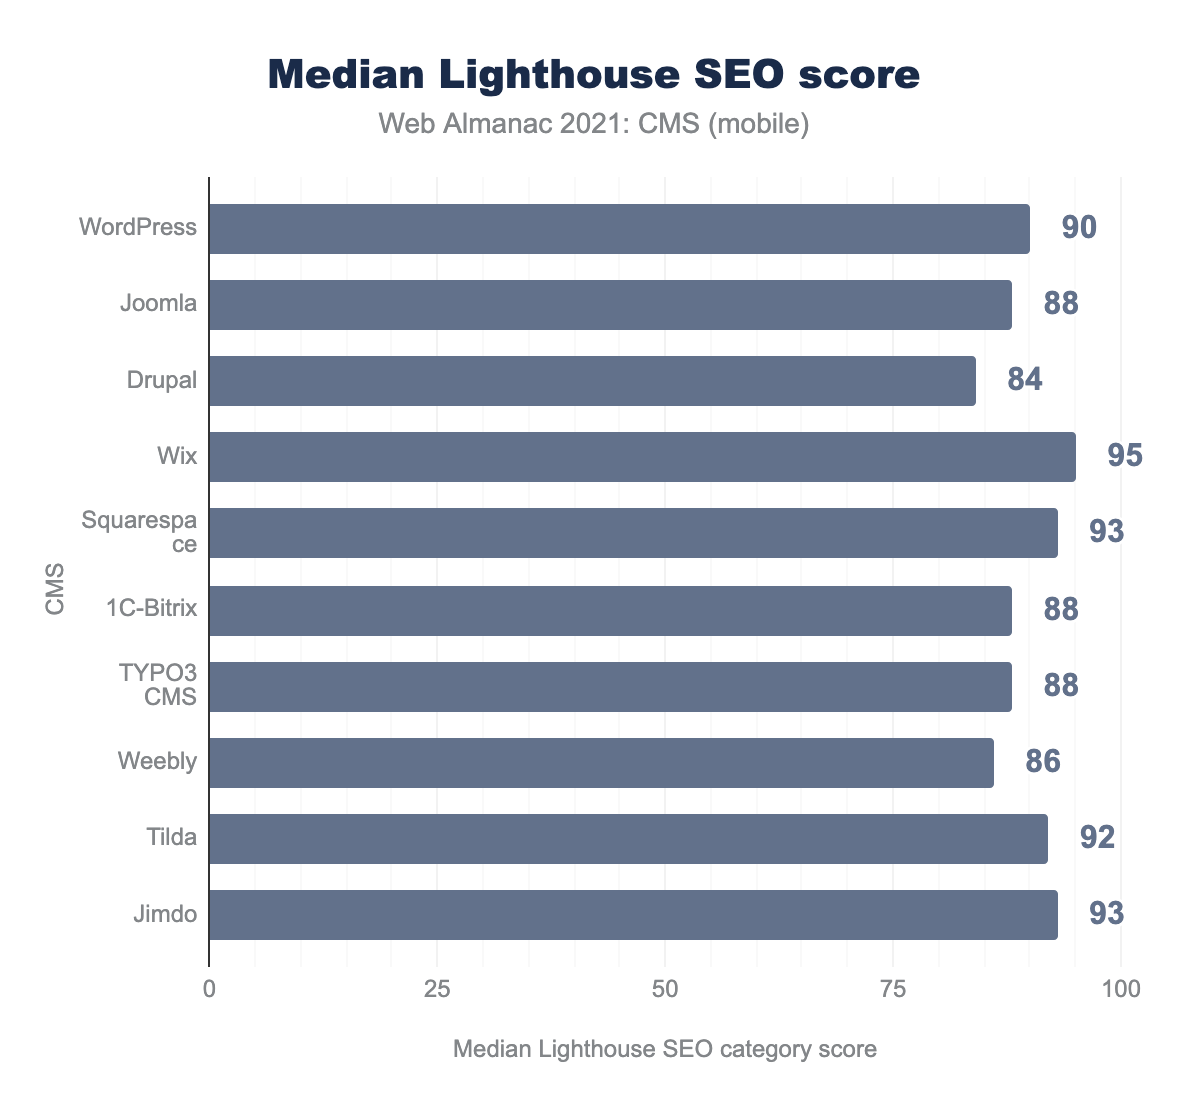 Top 10 CMSs median Lighthouse SEO score.